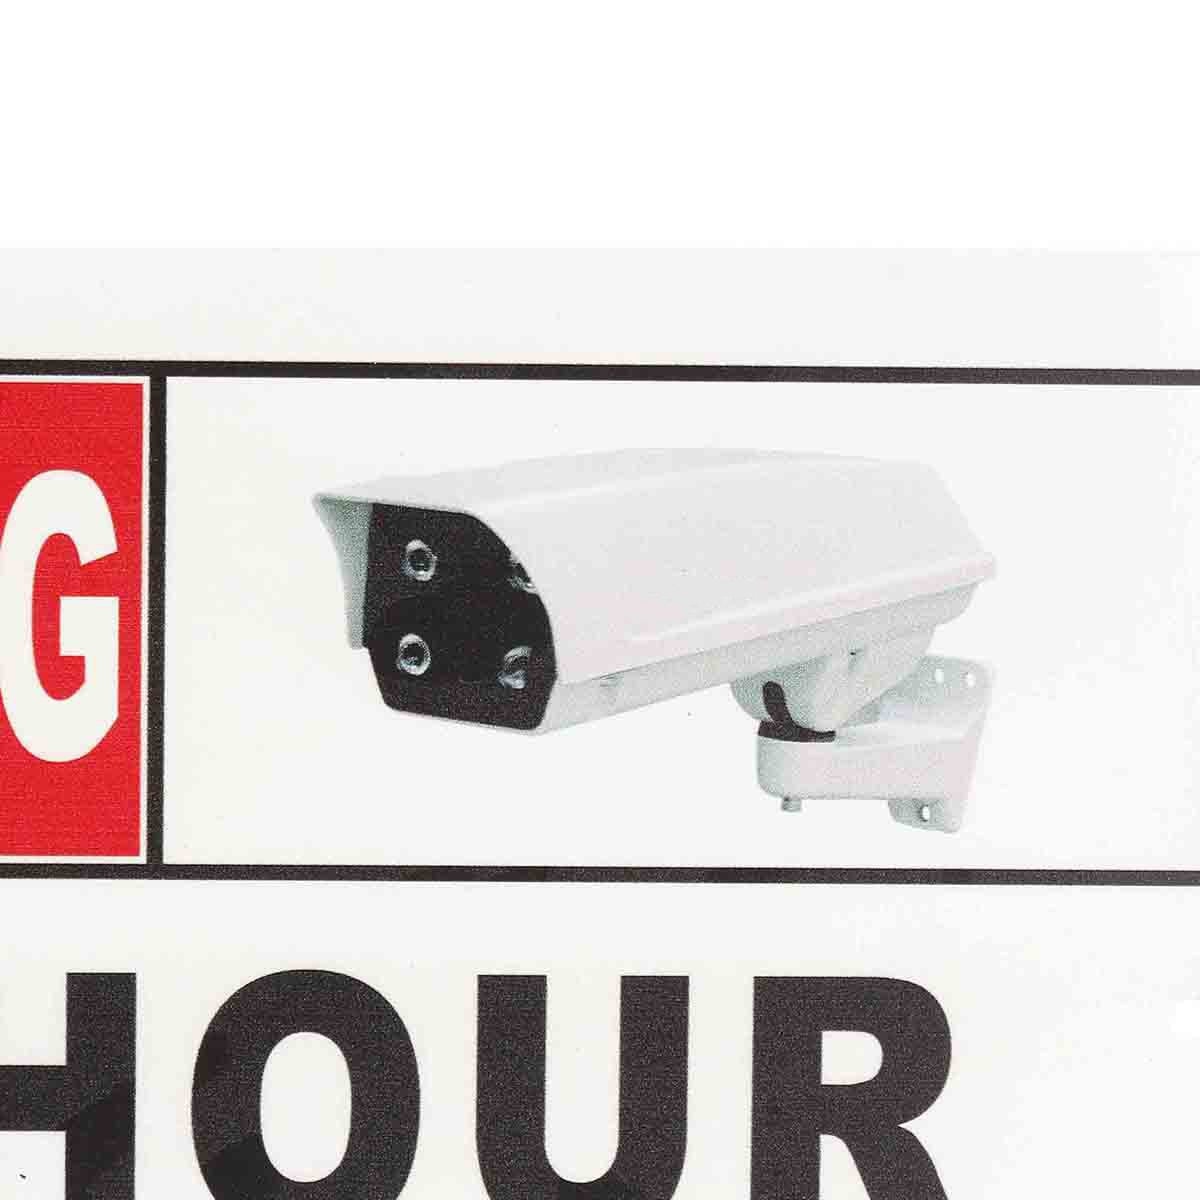 24 Uur Online Remote Video Surveillance Beveiliging Cctv Camera Metal Sign Decal